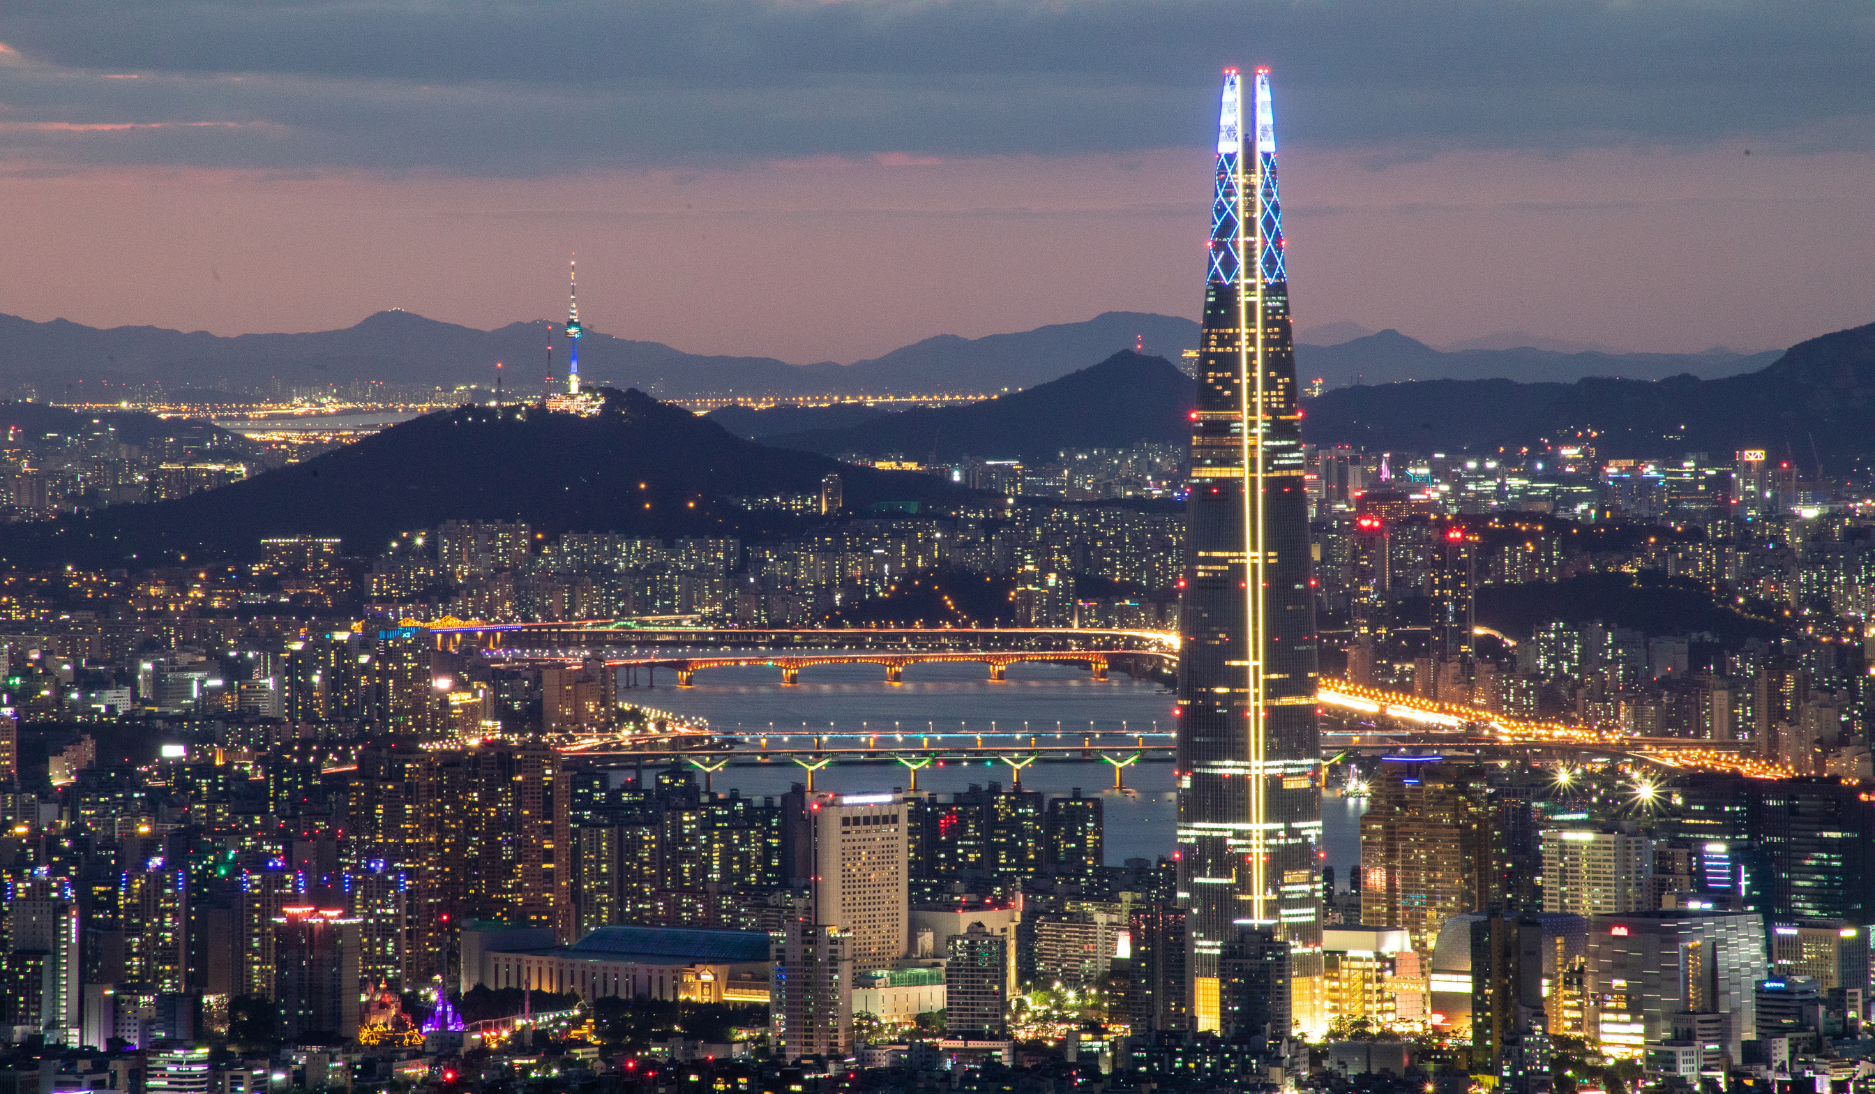 Lotte Tower Seoul